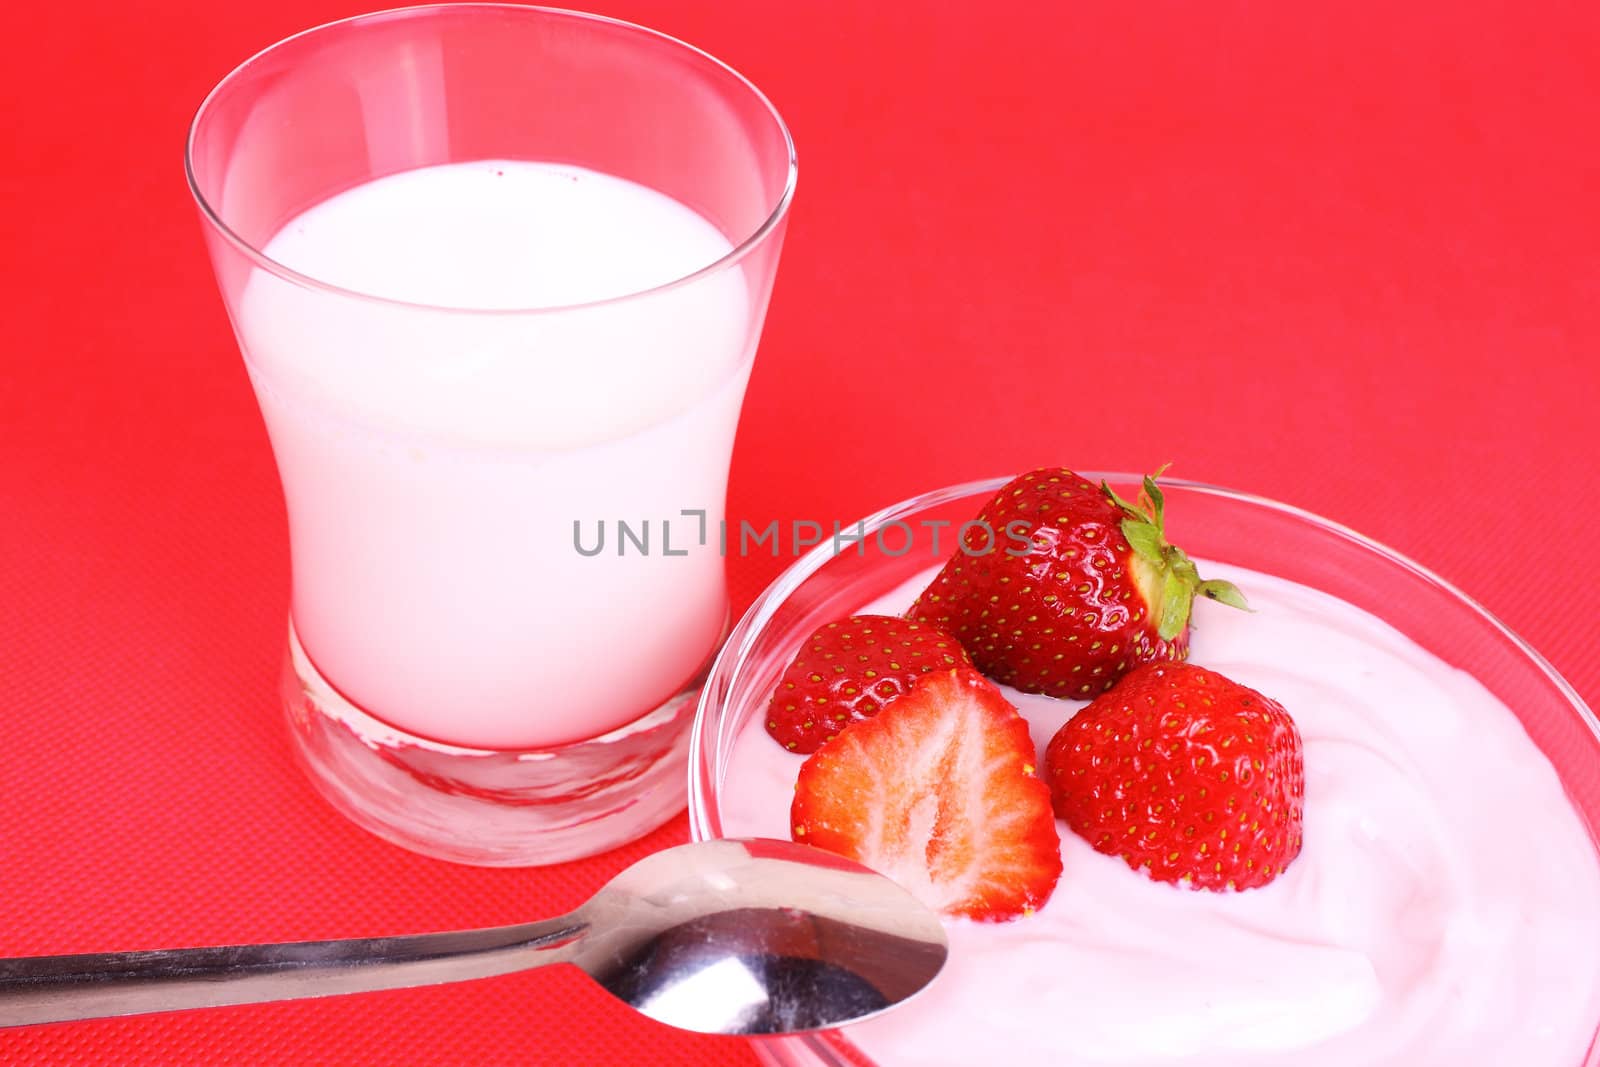 Shot of glass of milk, fruit yogurt and strawberries on red background